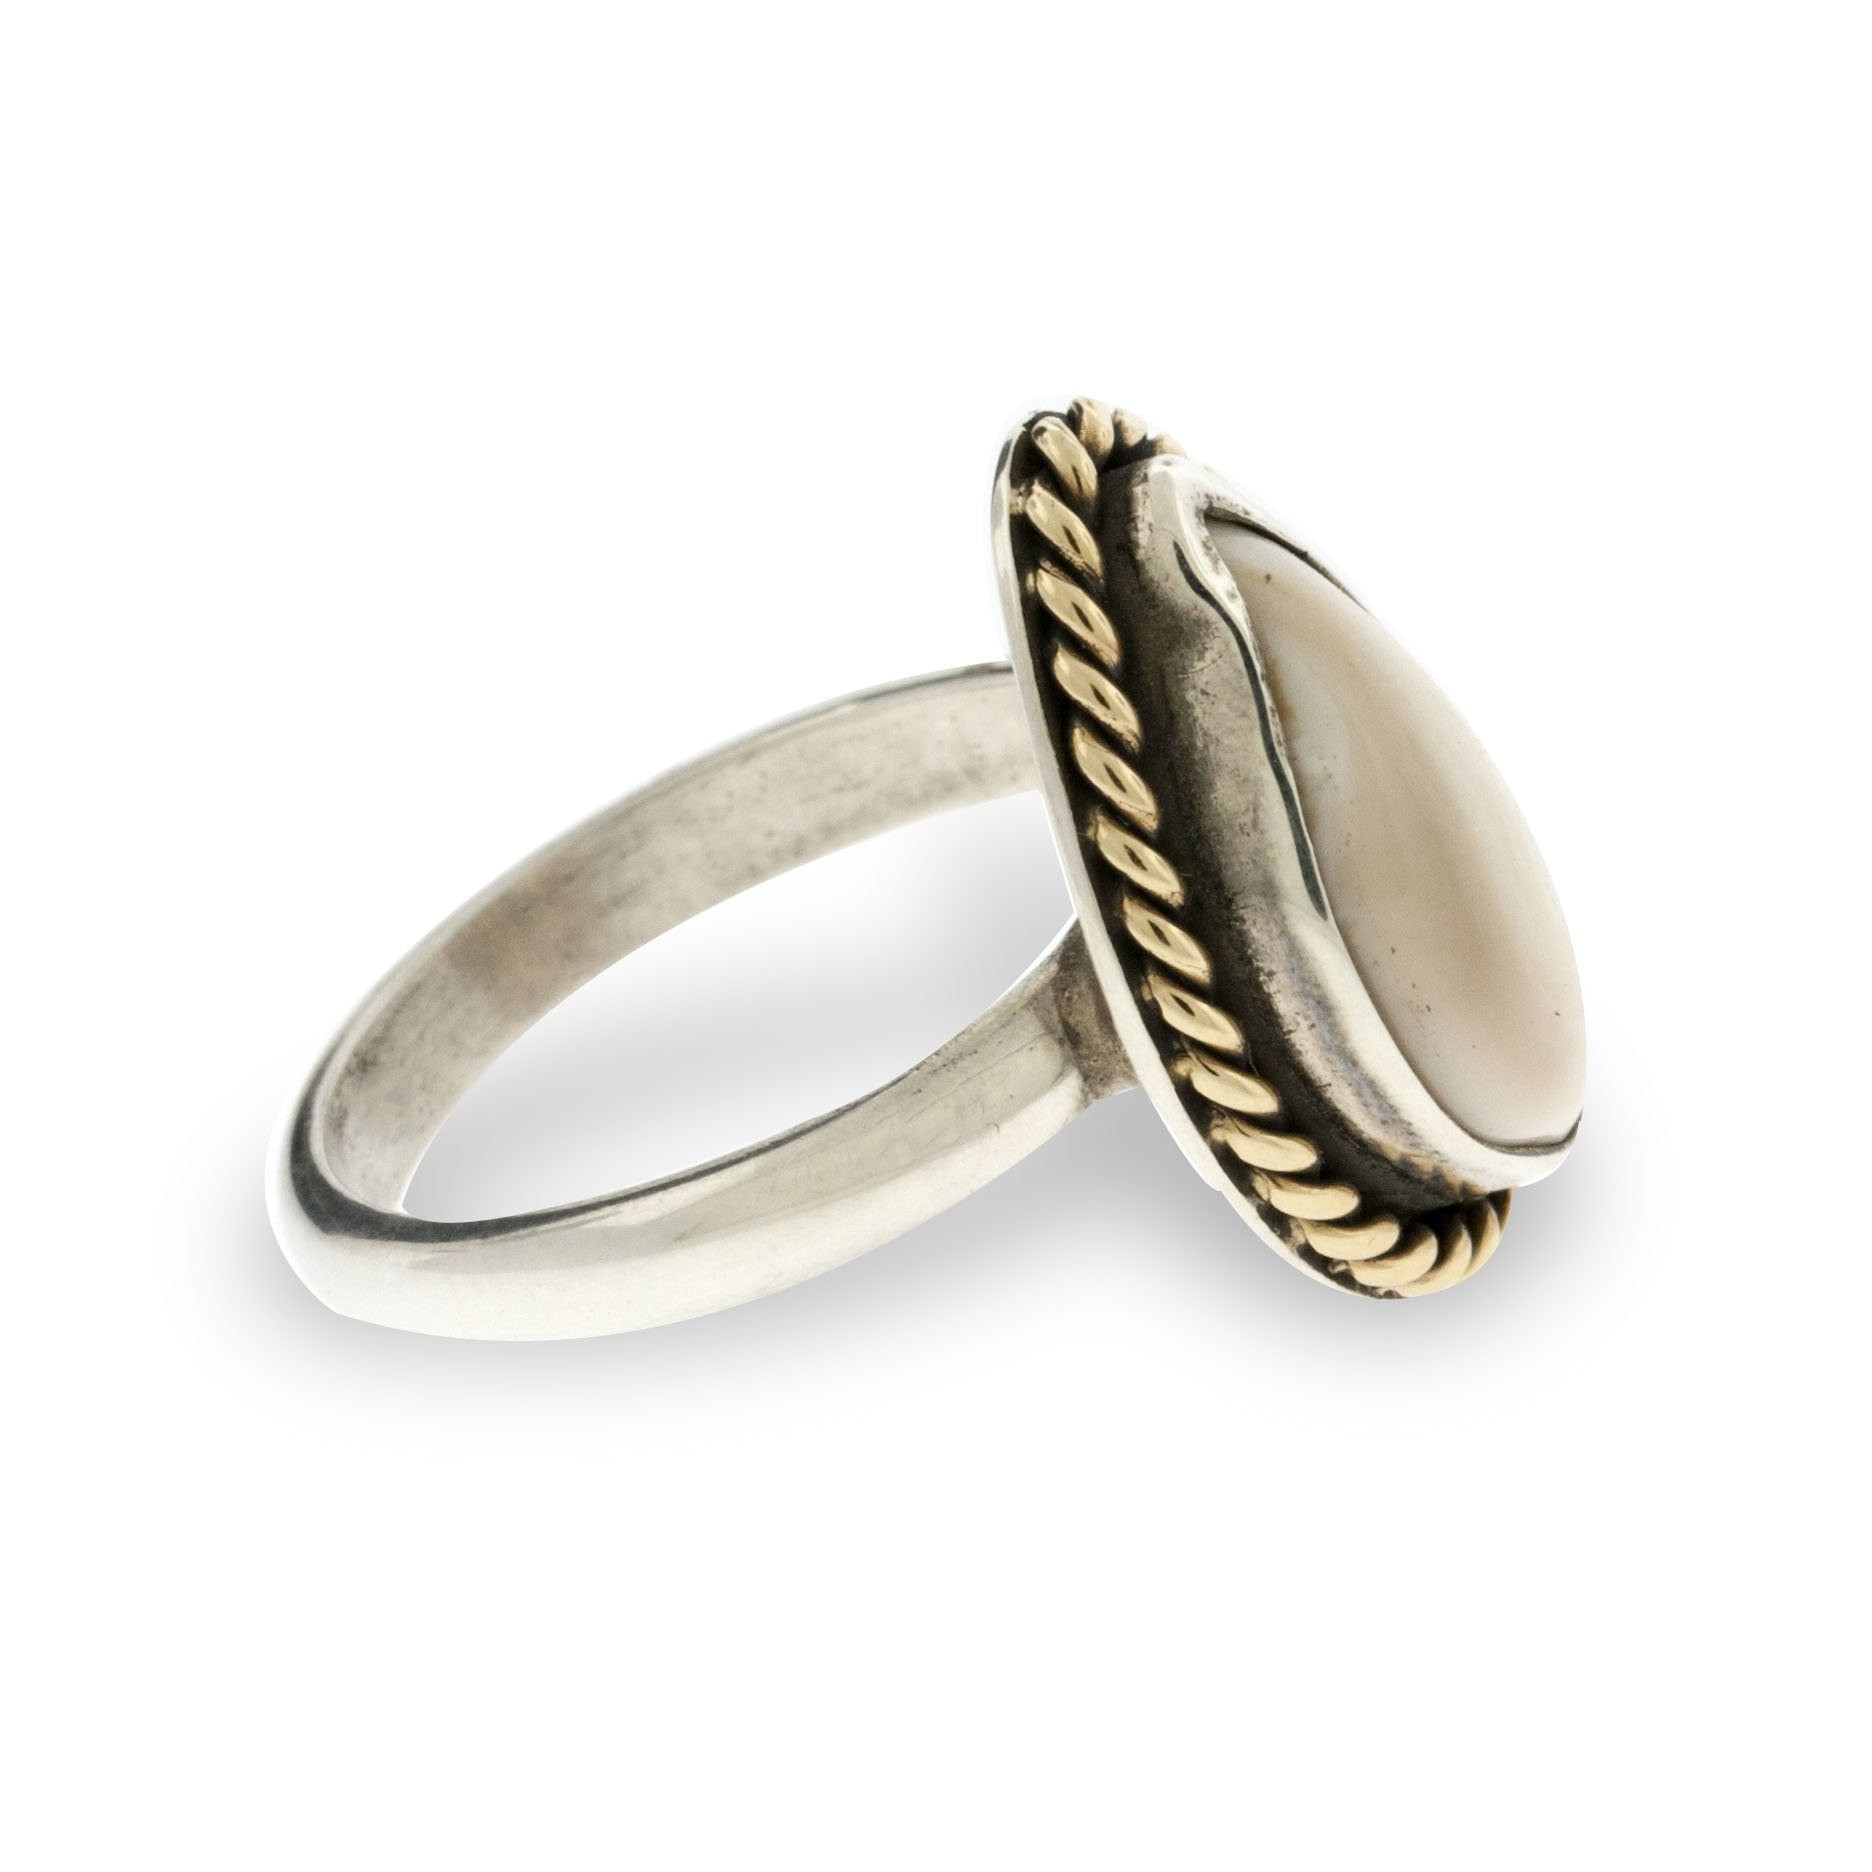 Elk Ivory Wedding Rings
 elk ivory wedding rings Wedding Decor Ideas